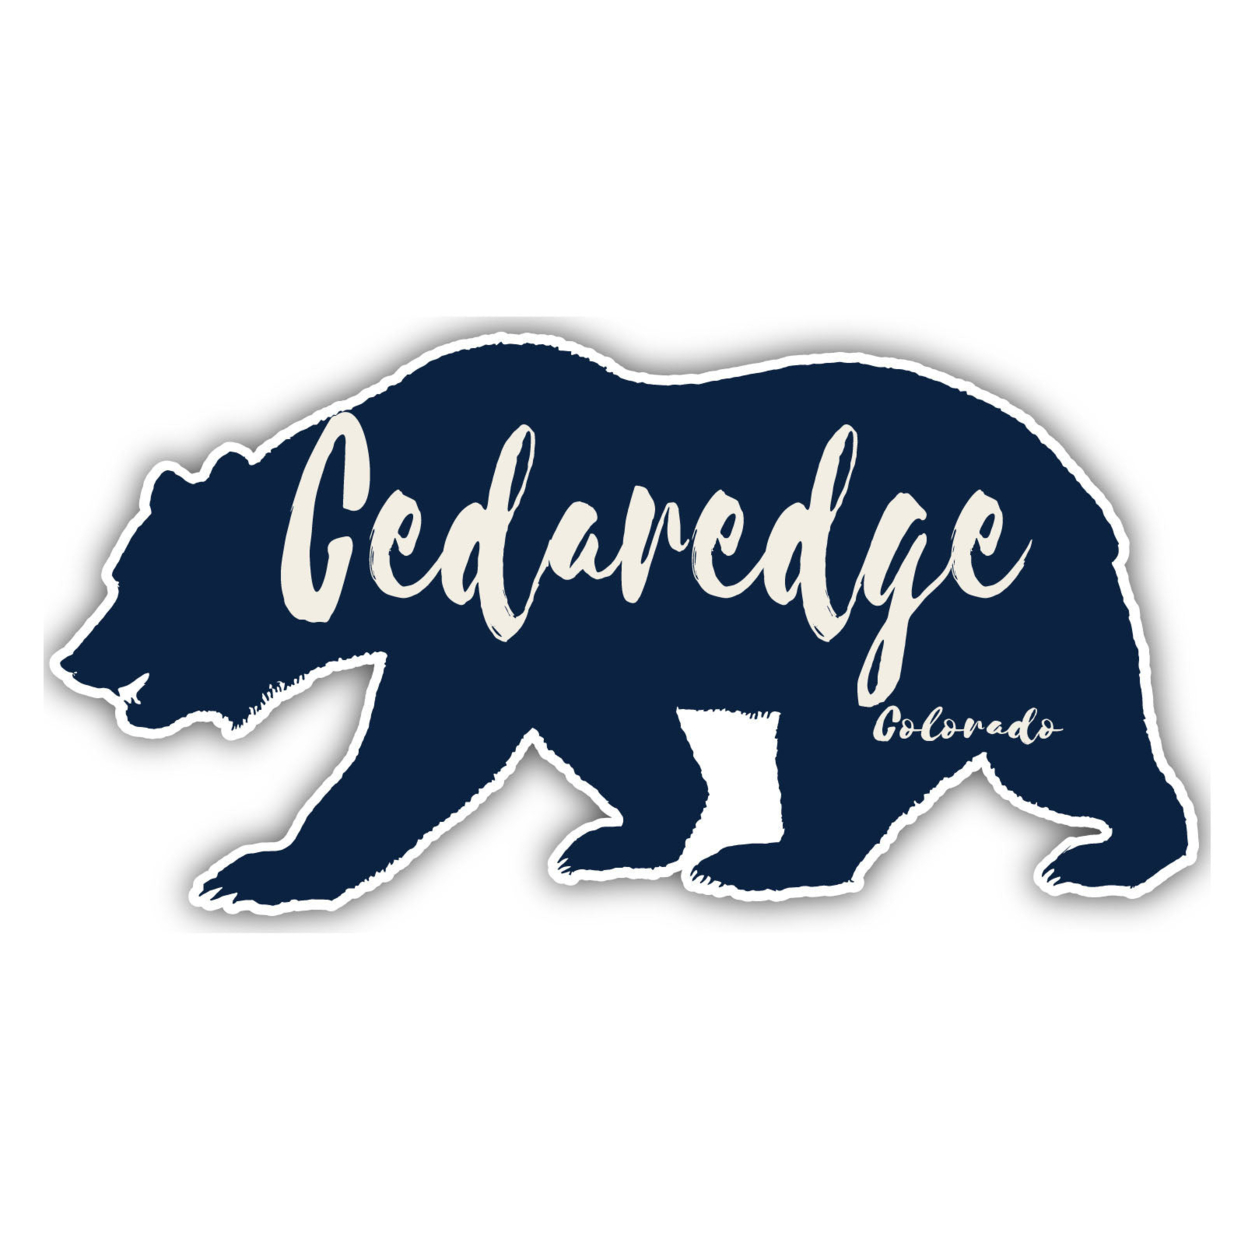 Cedaredge Colorado Souvenir Decorative Stickers (Choose Theme And Size) - Single Unit, 2-Inch, Bear